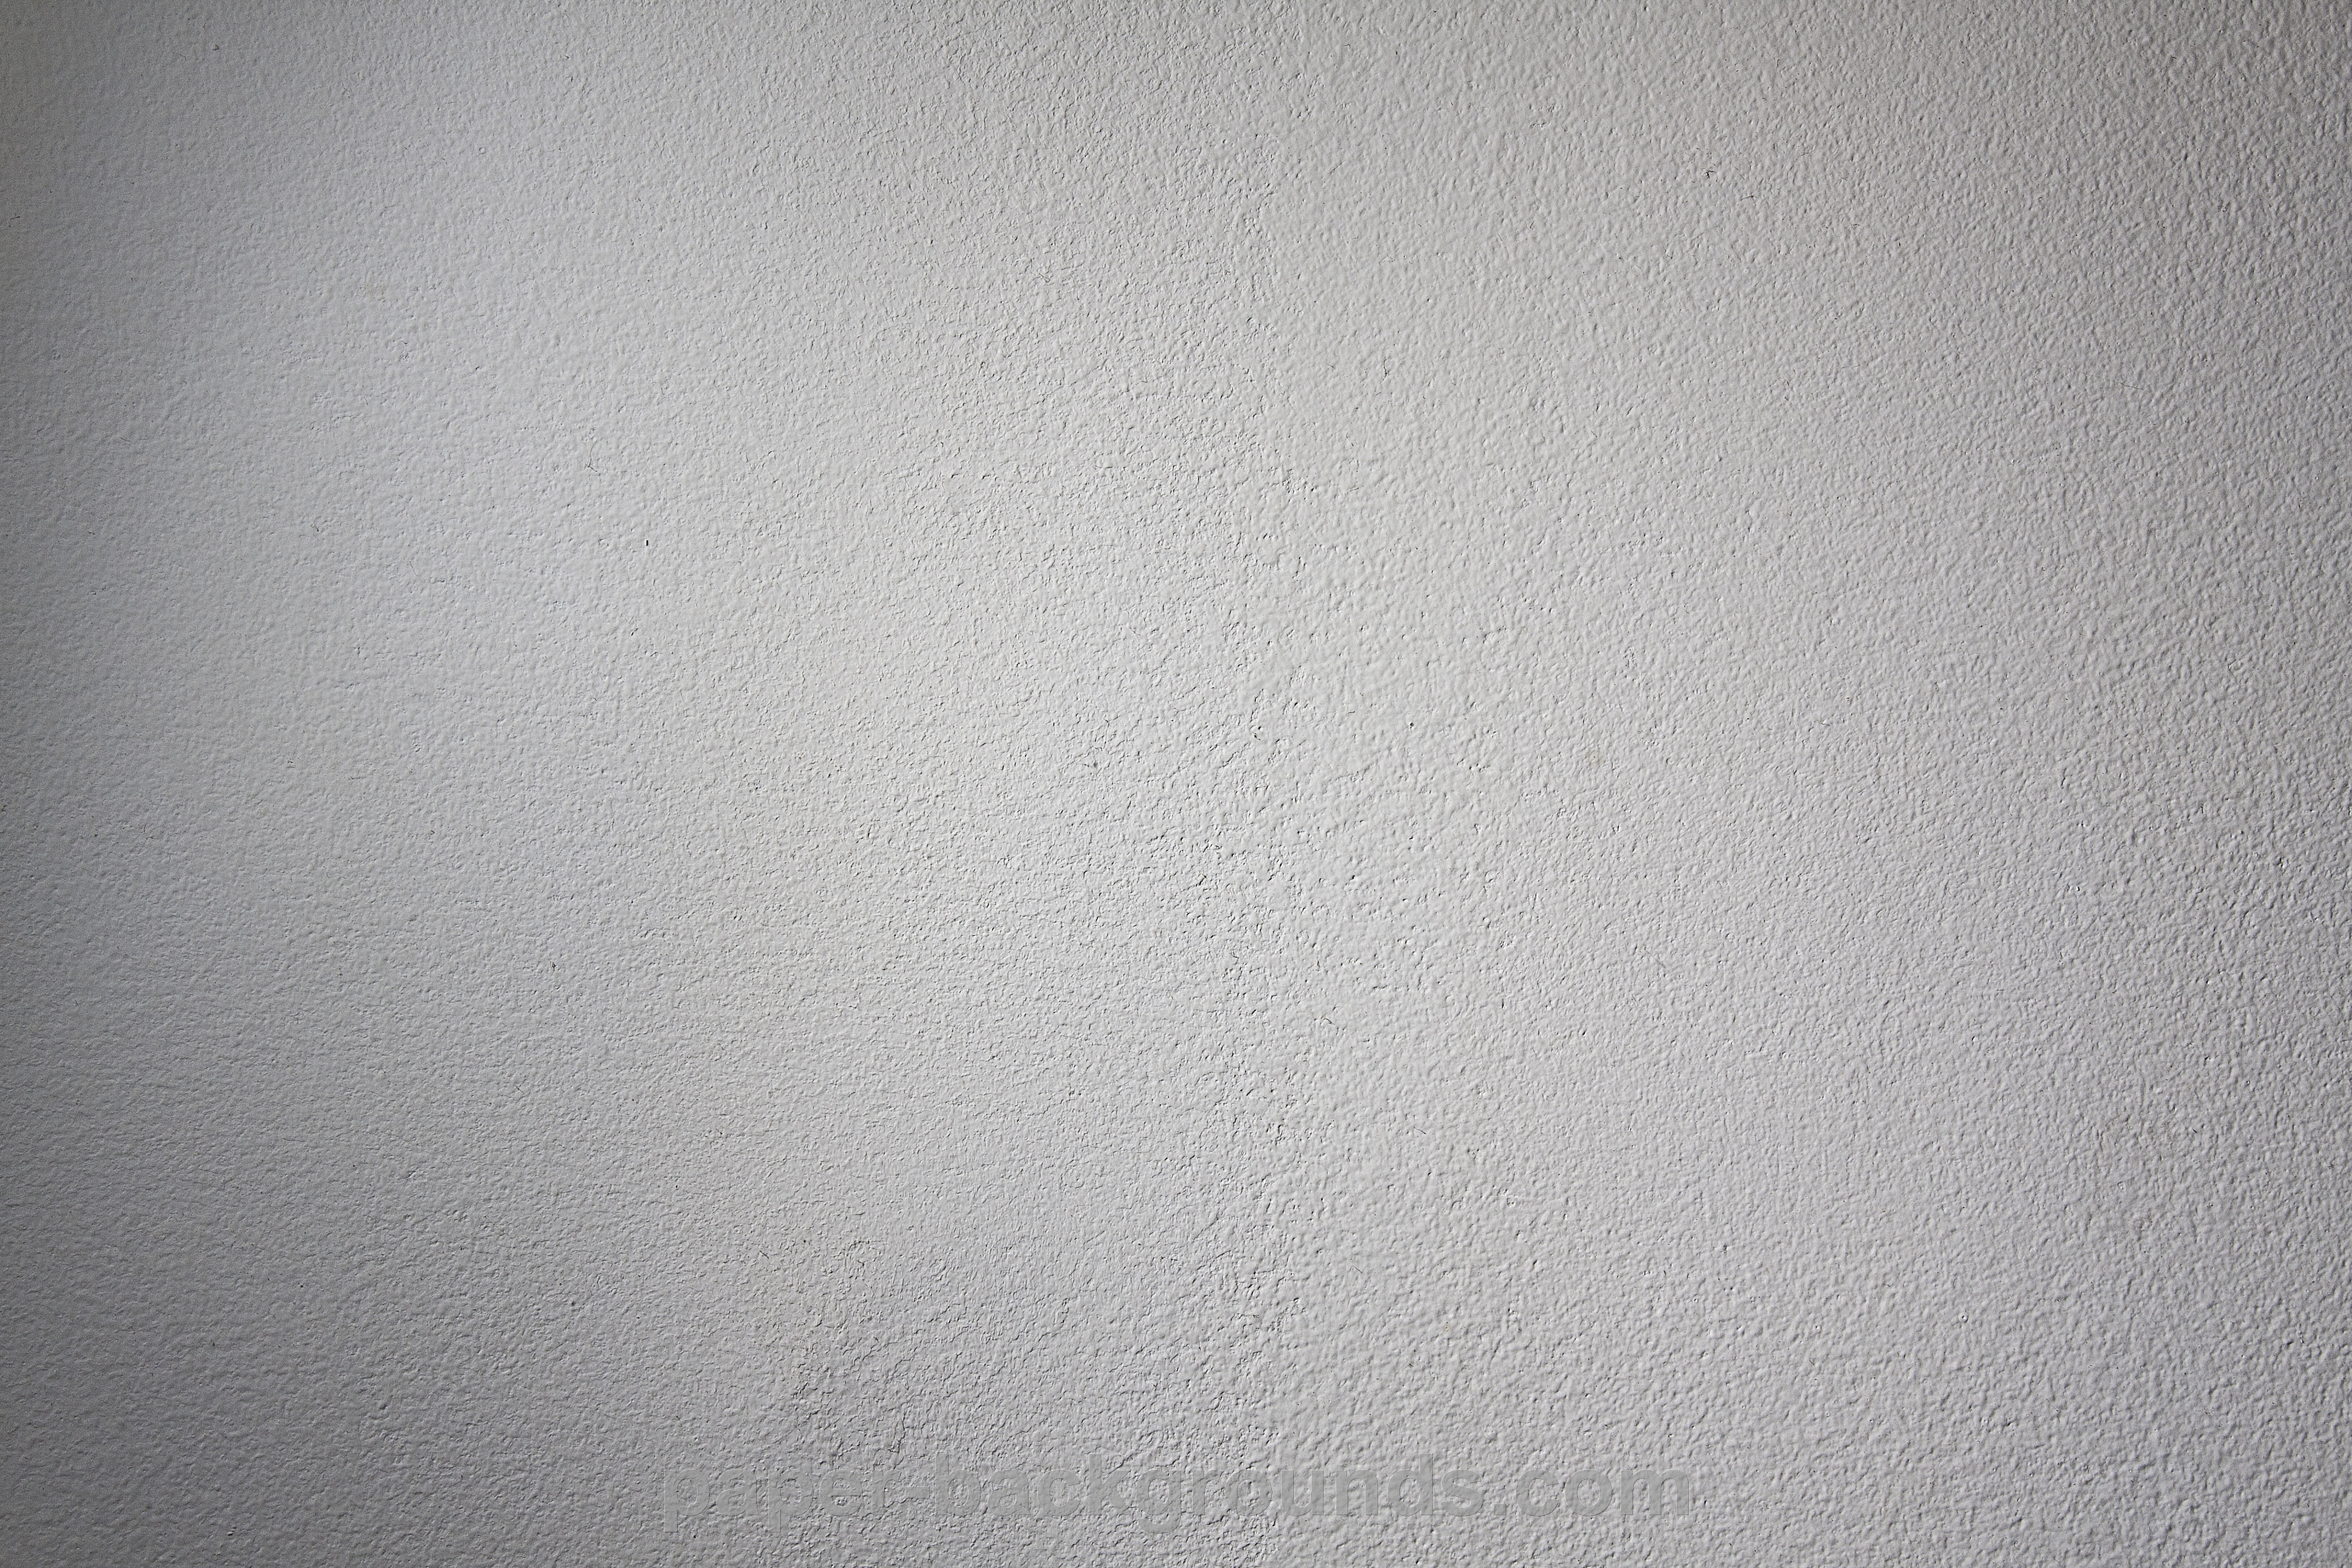  Grey  and White  Wallpaper WallpaperSafari